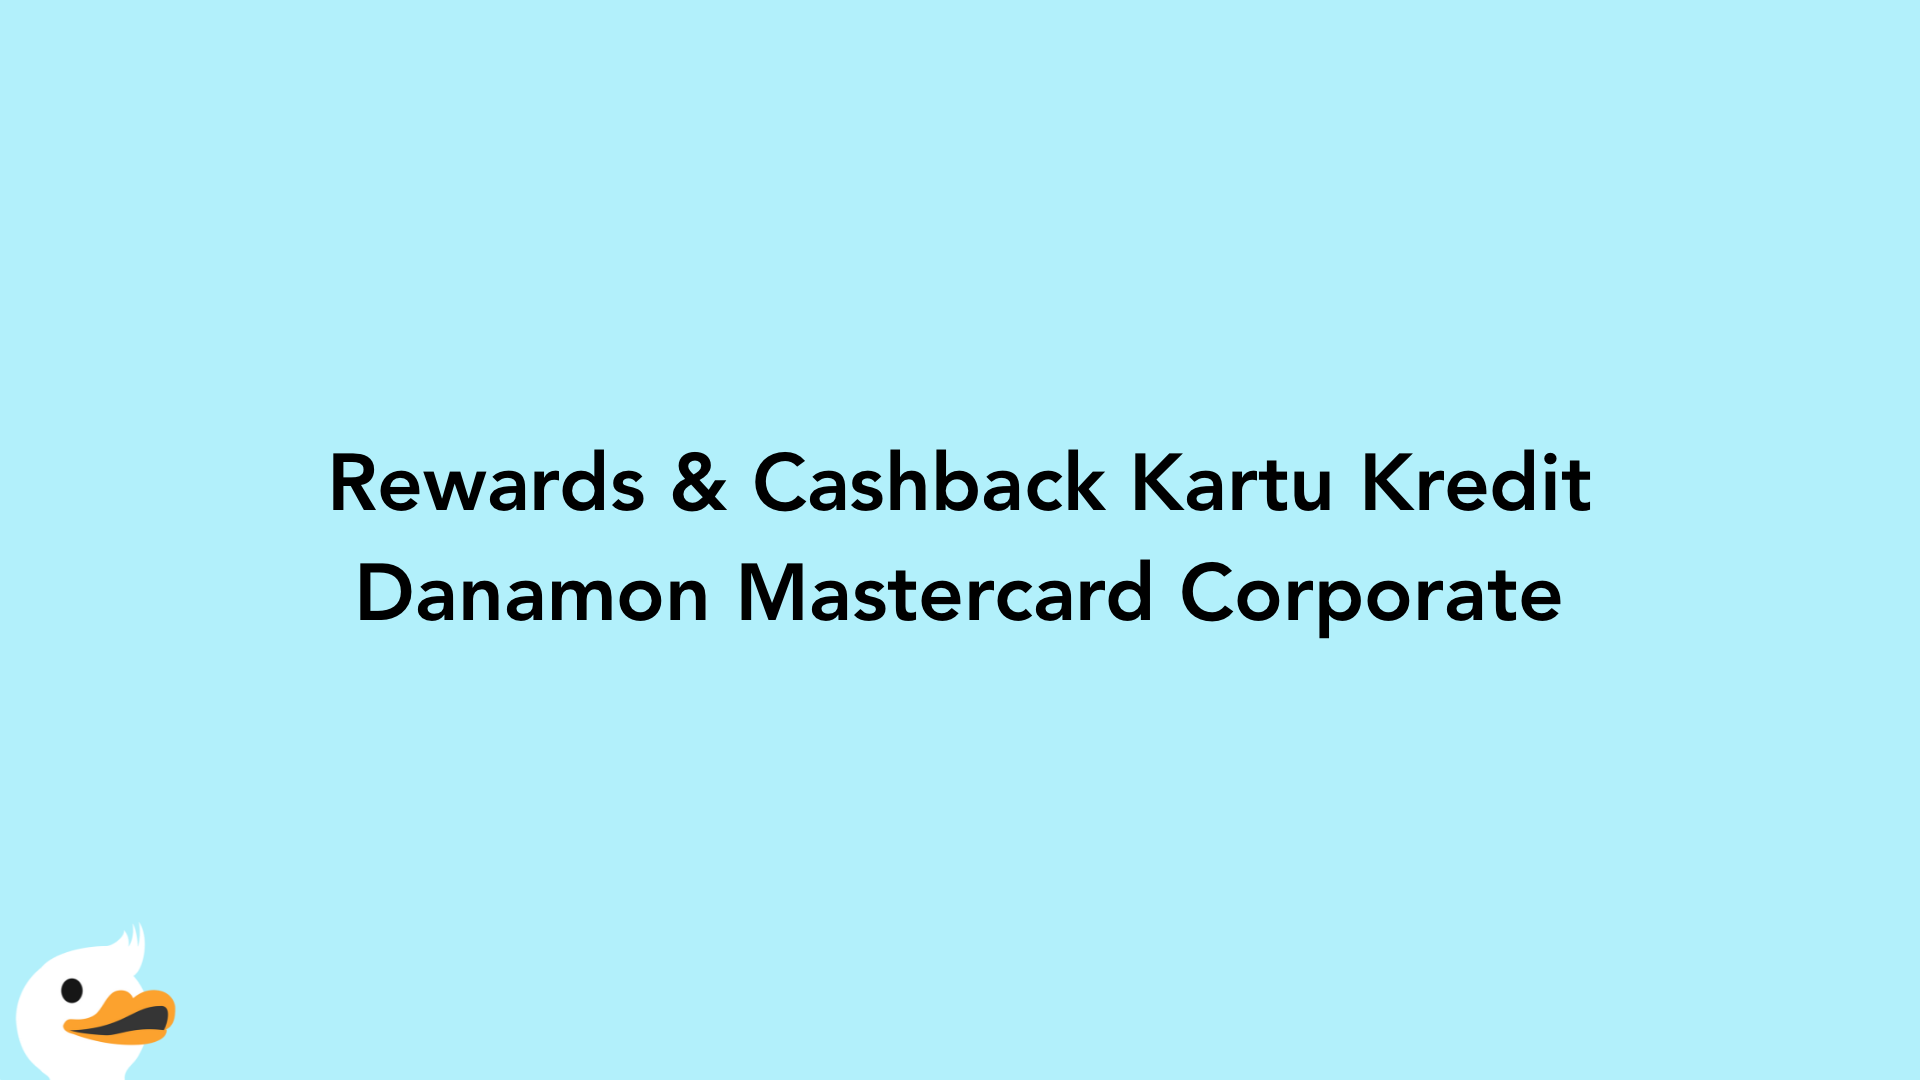 Rewards & Cashback Kartu Kredit Danamon Mastercard Corporate